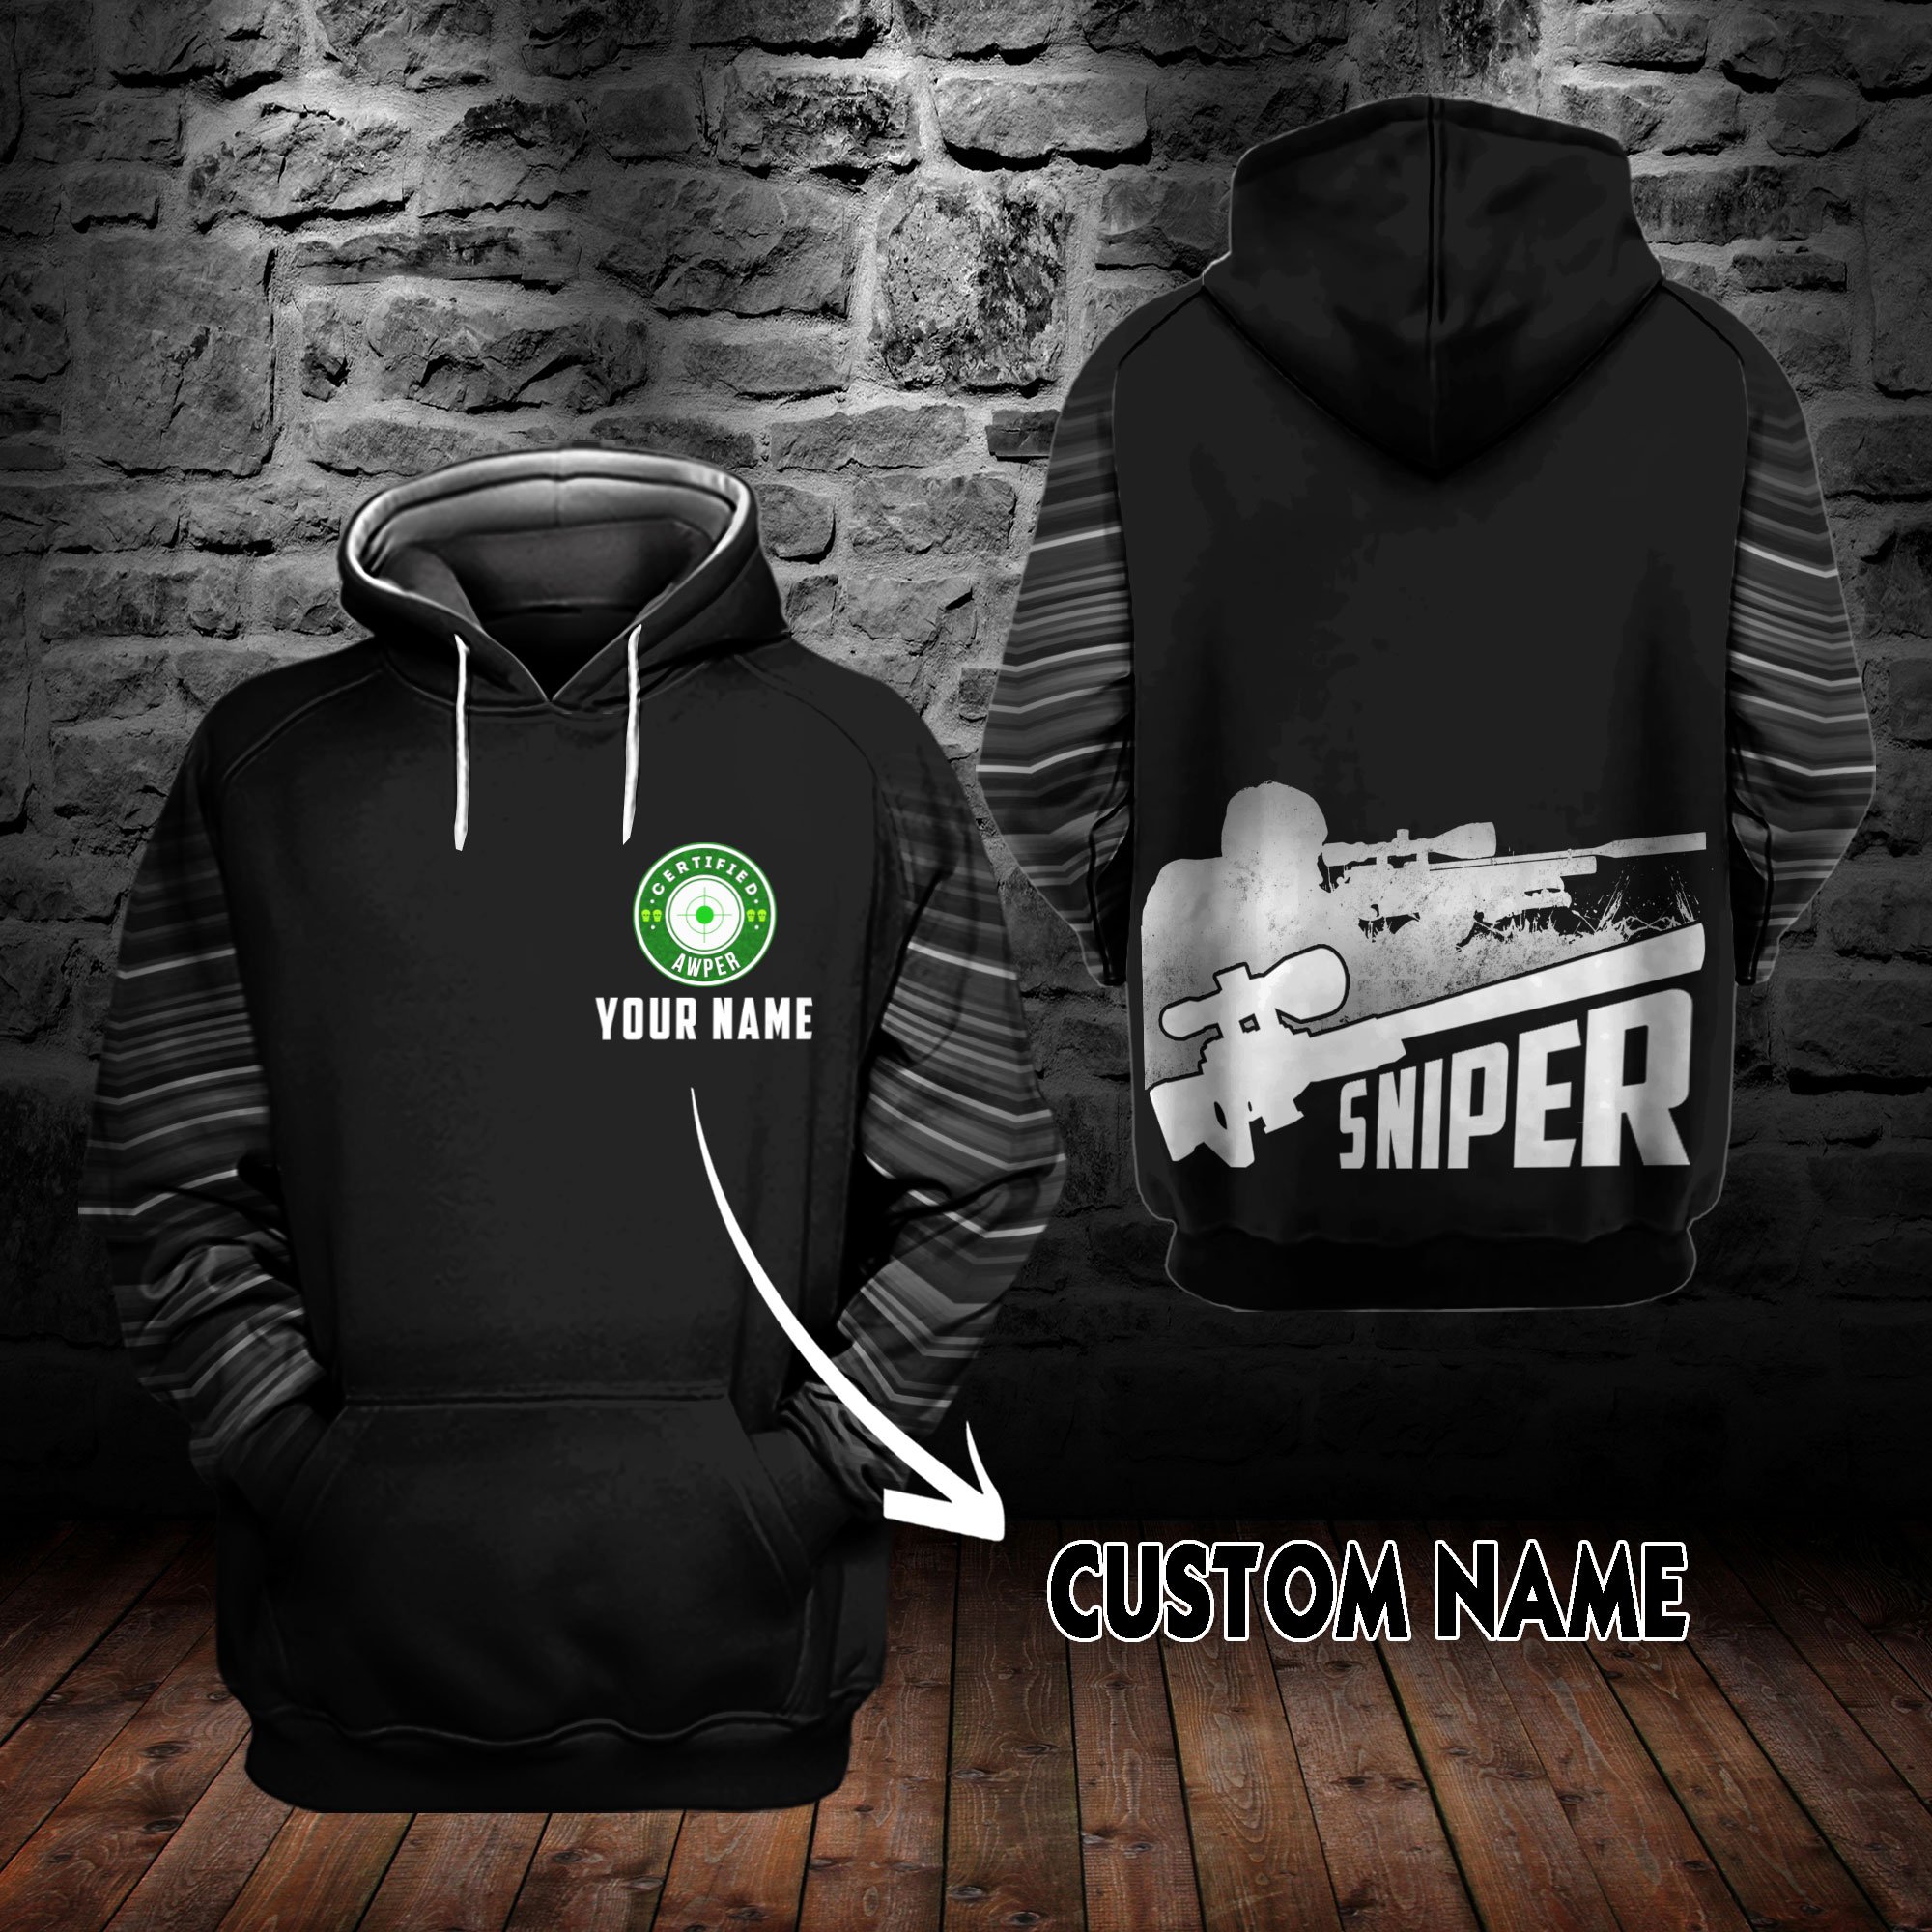 Sniper certified personalized custom name 3d hoodie